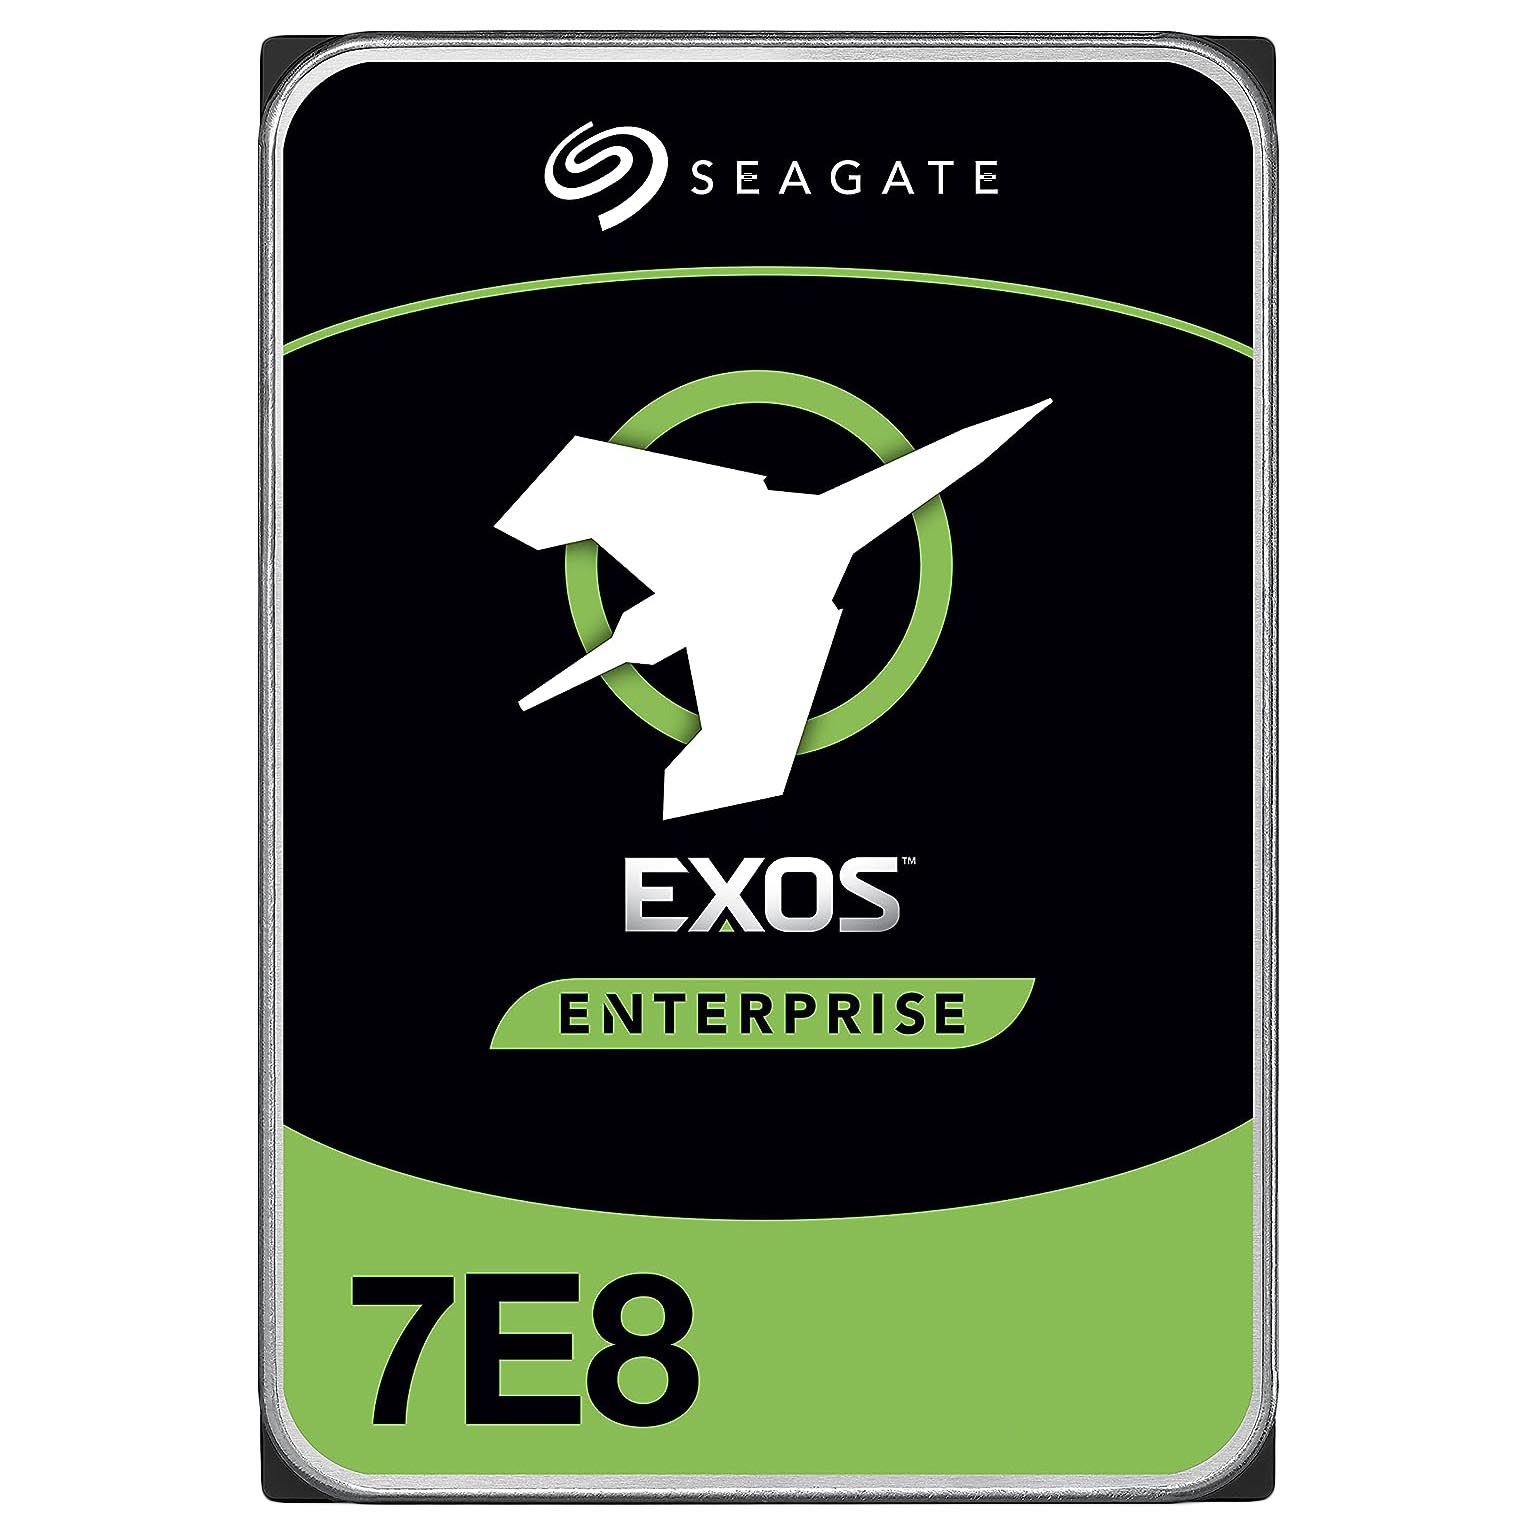 Внутренний жесткий диск Seagate Exos 7E8 512n, ST4000NM0035, 4 Тб внутренний жесткий диск seagate exos 7e8 512n st2000nm0055 2 тб